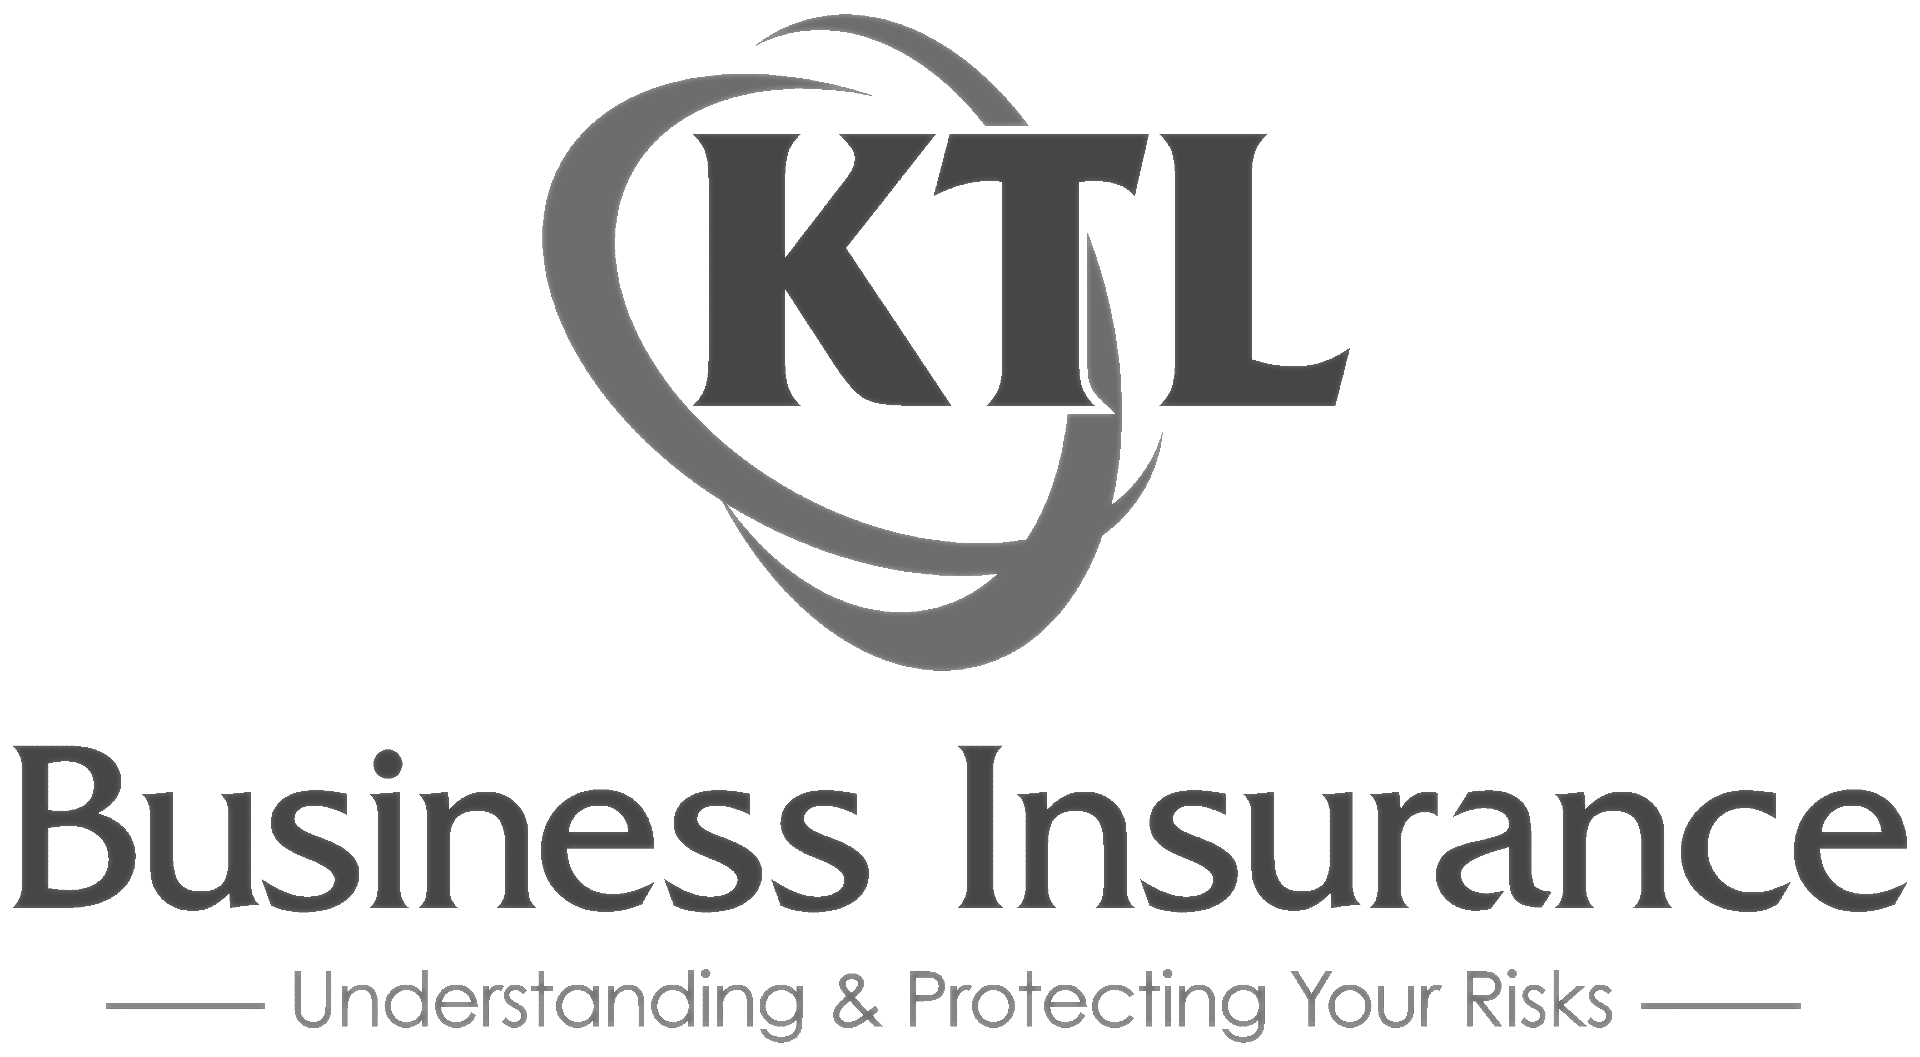 KTL Business Insurance